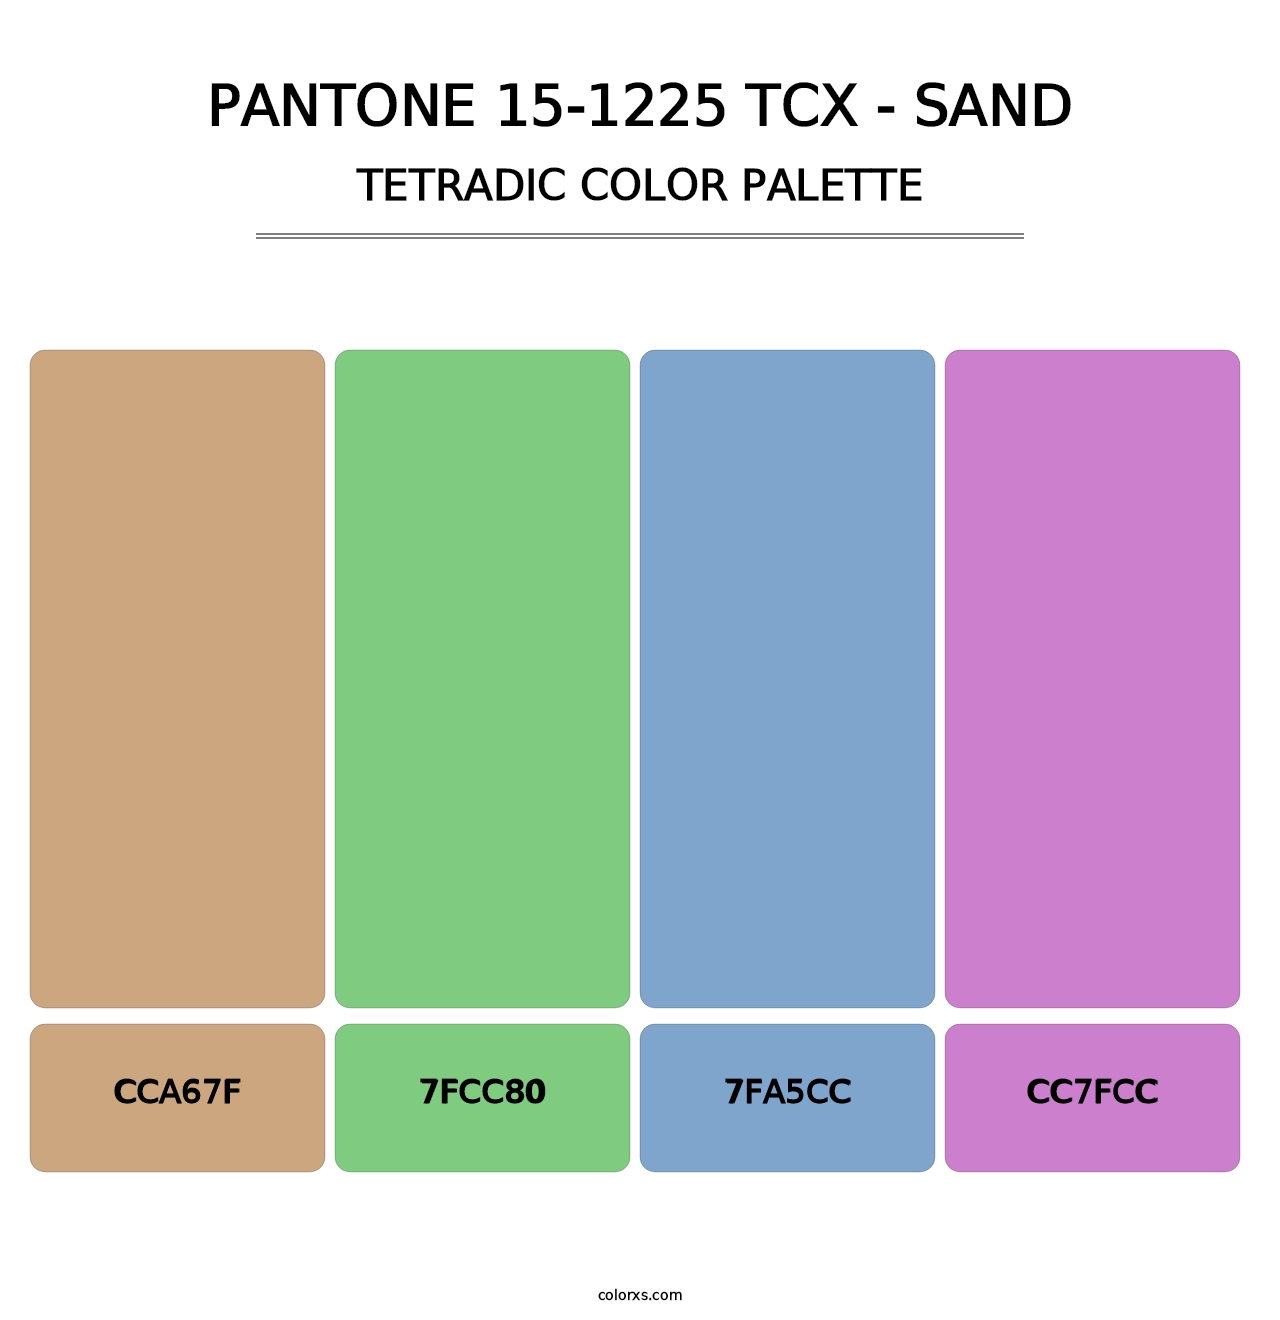 PANTONE 15-1225 TCX - Sand - Tetradic Color Palette